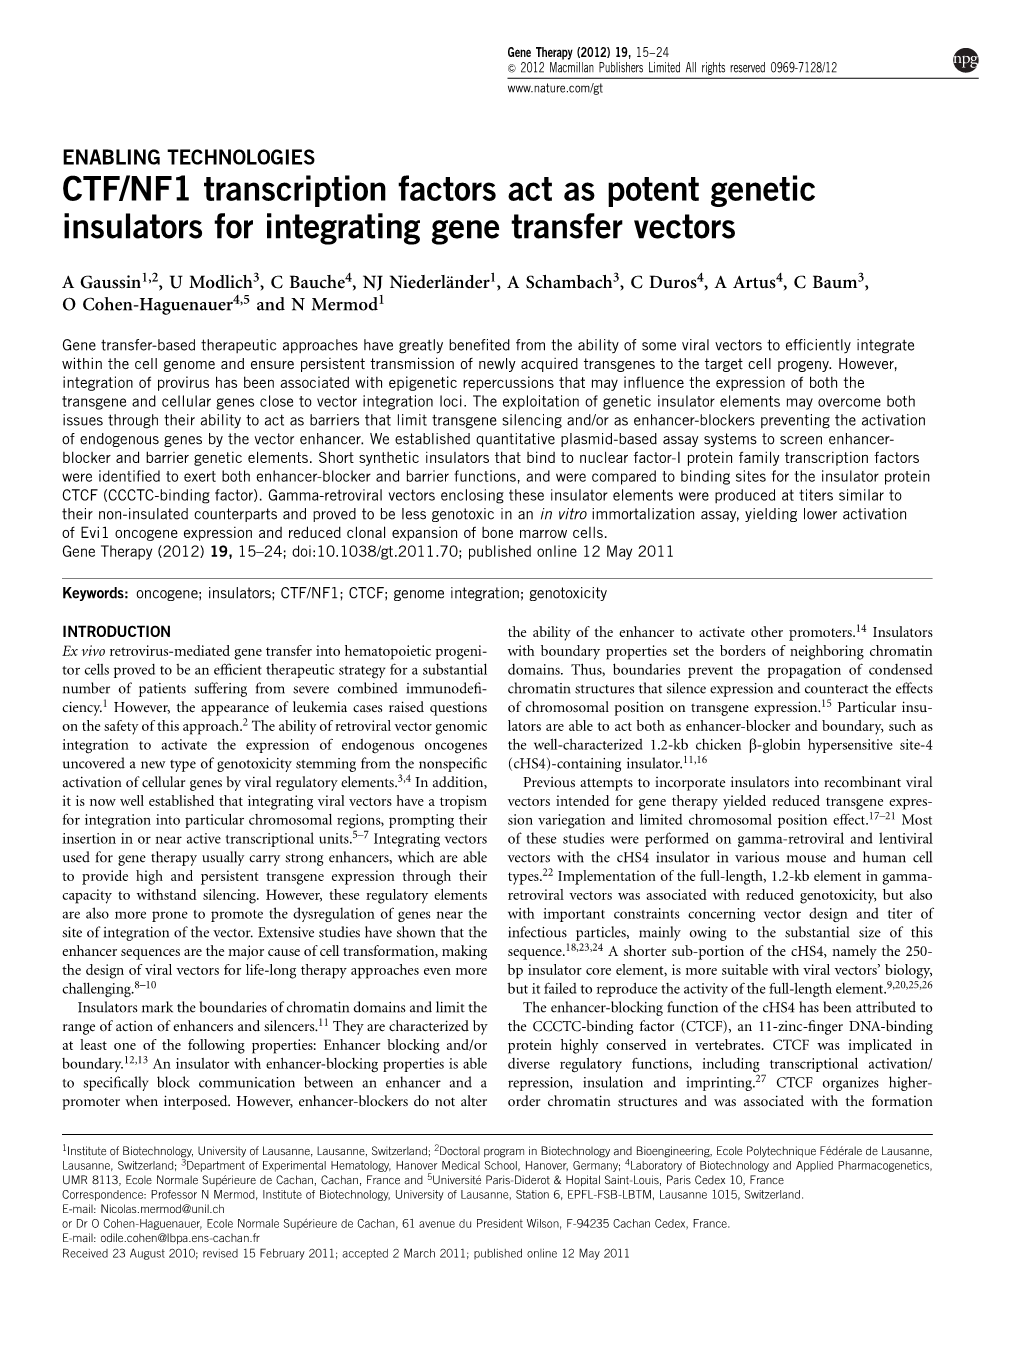 NF1 Transcription Factors Act As Potent Genetic Insulators for Integrating Gene Transfer Vectors